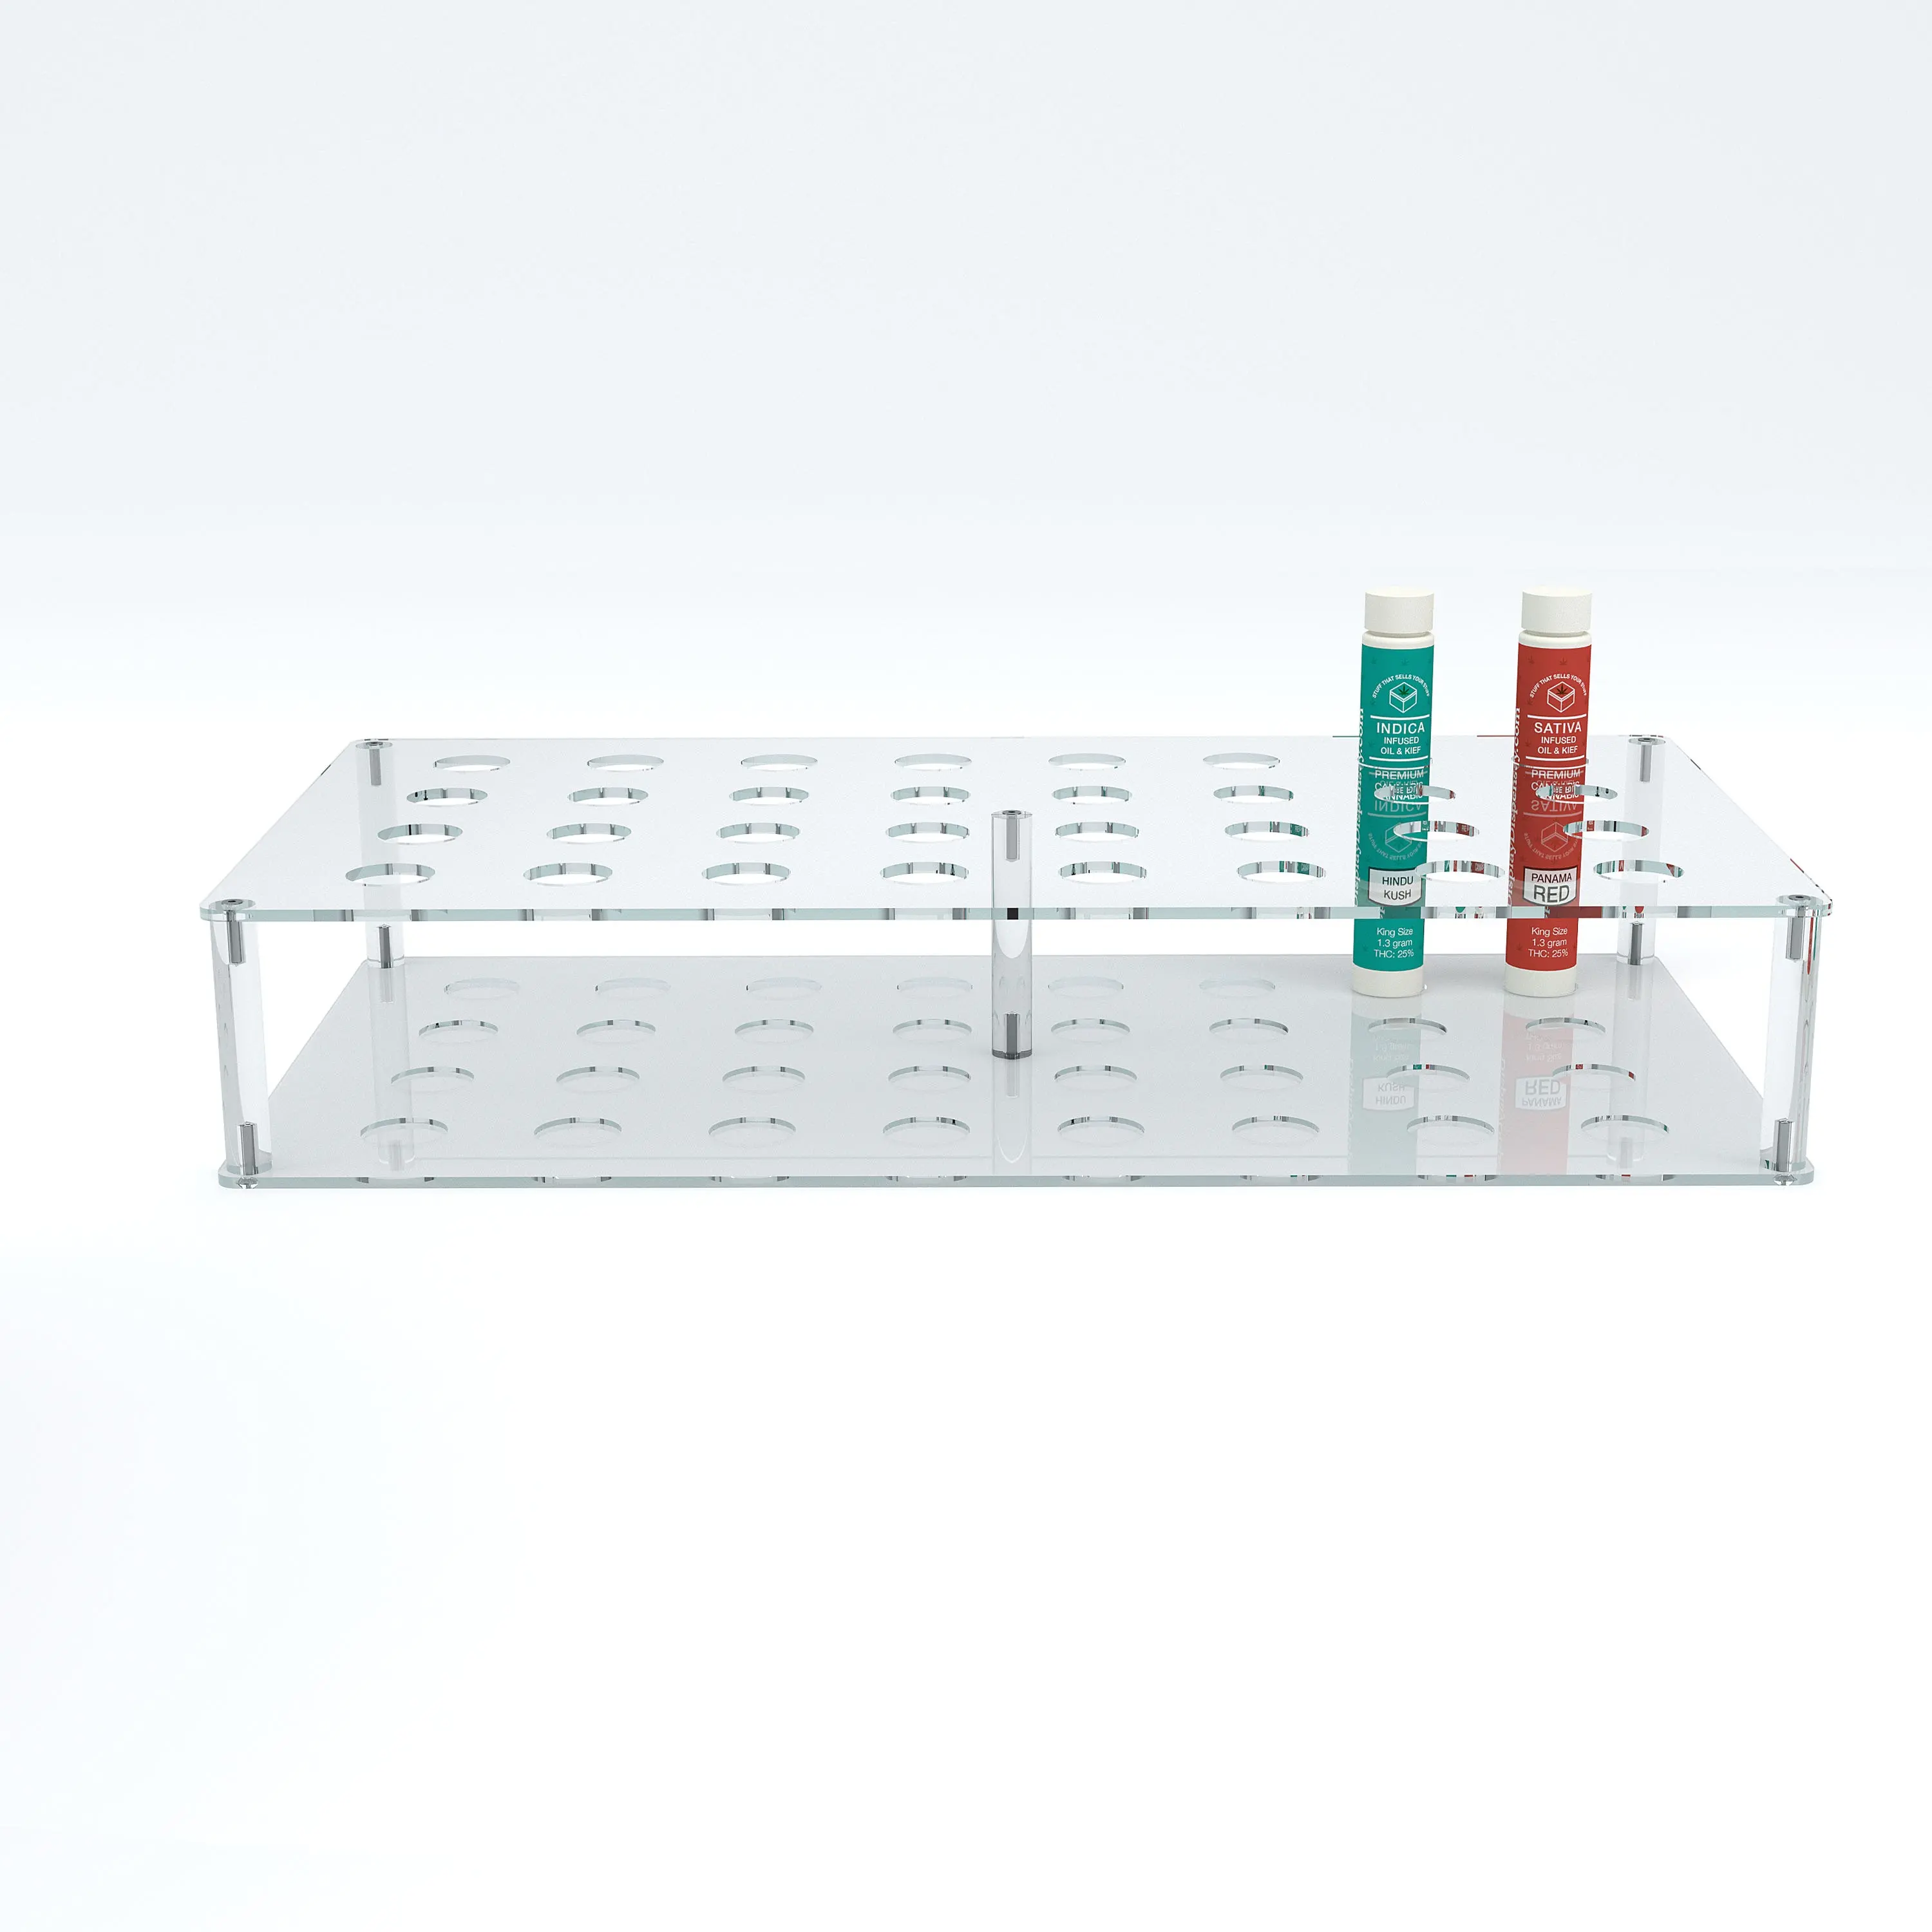 Yageli-estante de tubo de prueba acrílico personalizado, soporte de tubo de prueba de acrílico transparente, mostrador superior, preenrollable